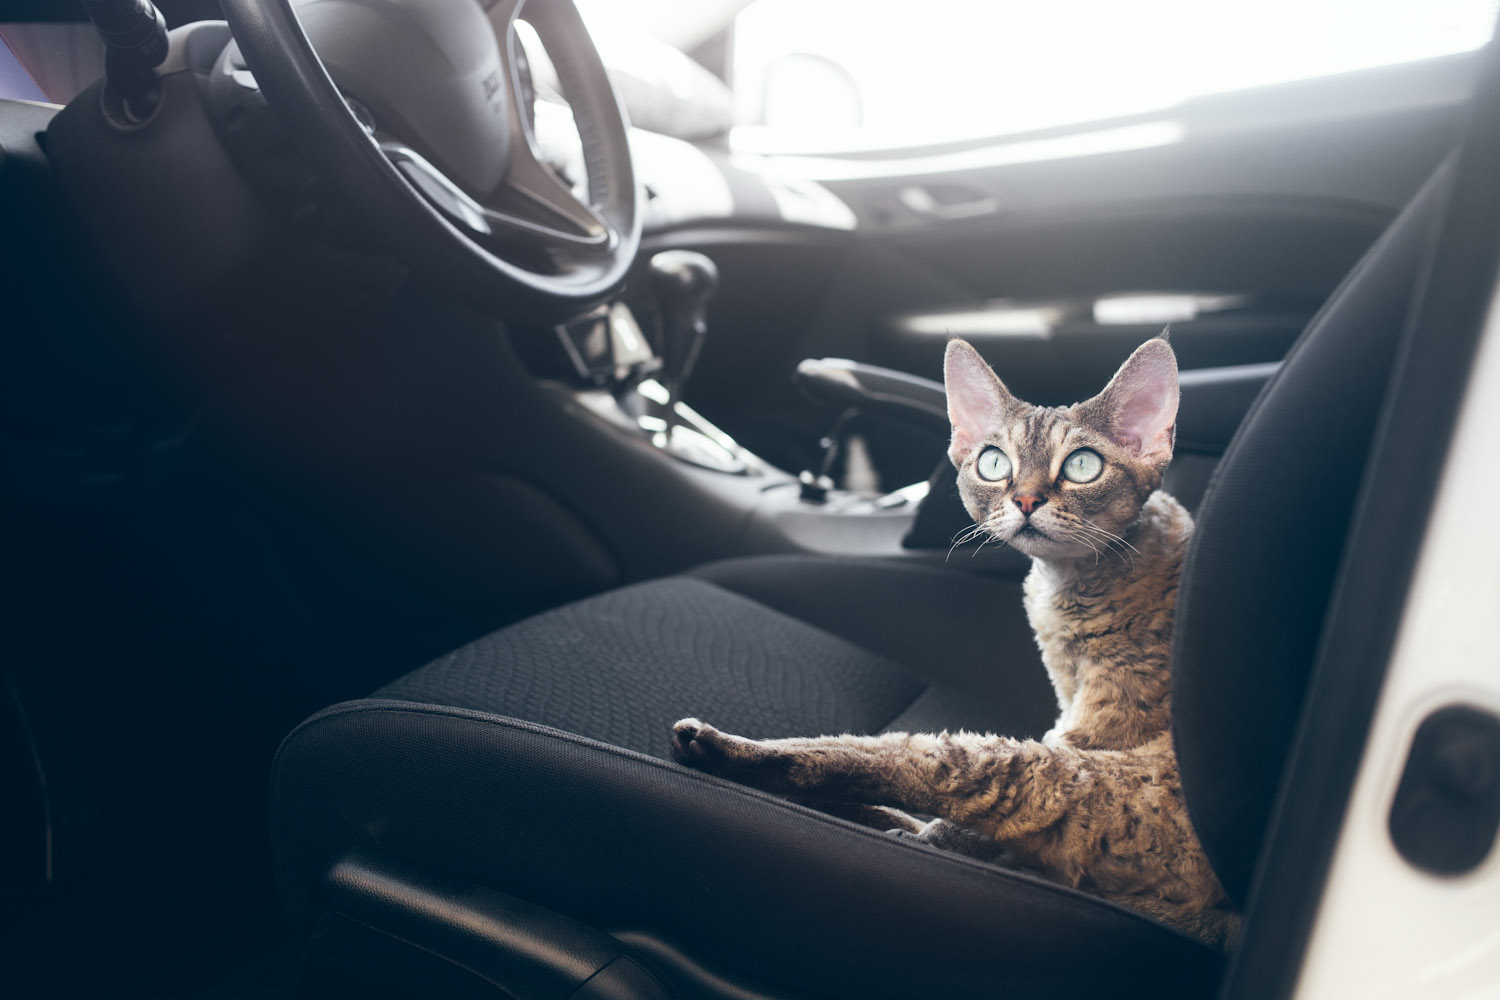 https://www.adventurecats.org/wp-content/uploads/2016/11/cat-in-car.jpg